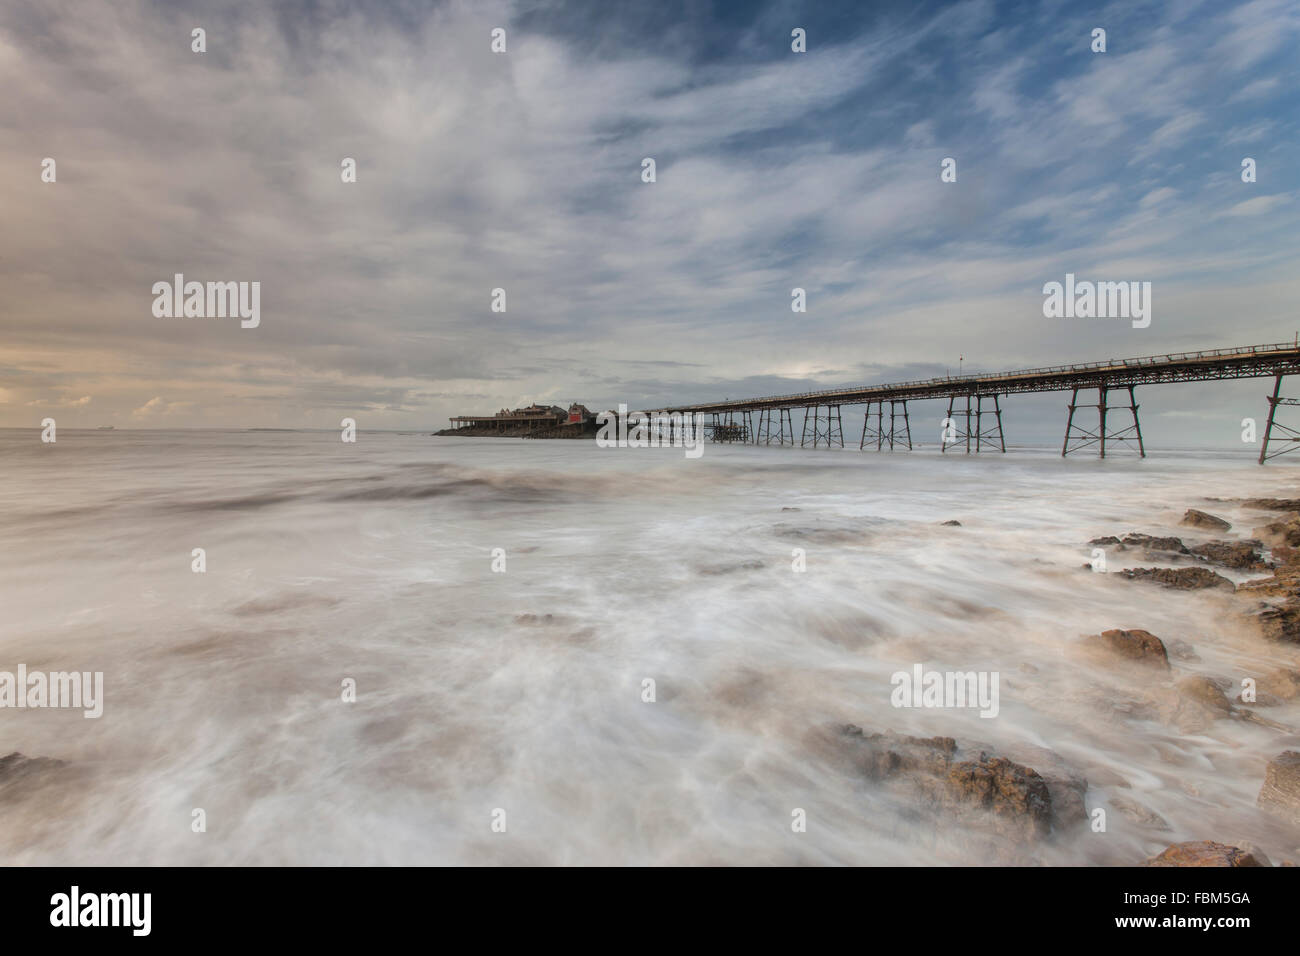 A view of Birnbeck Pier, Weston Super Mare, Somerset, UK. Stock Photo